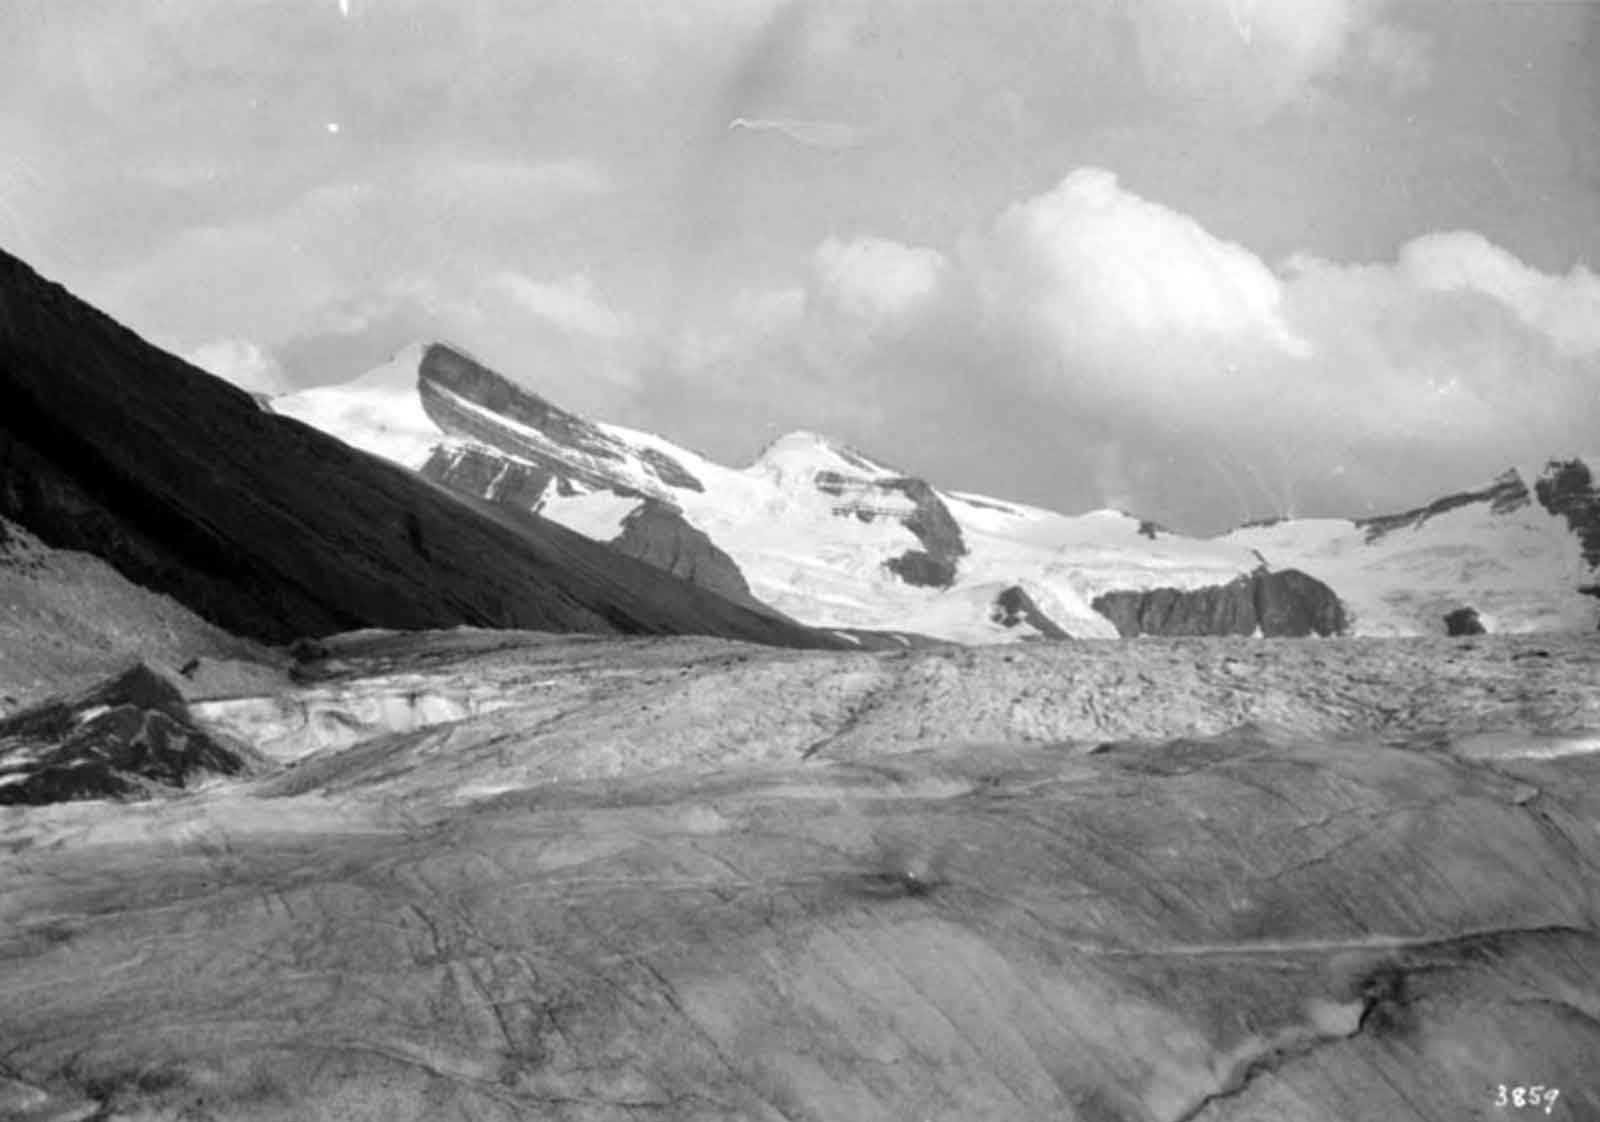 Mount Robson - Glacier looking towards Resplendent
William James Topley, 1914